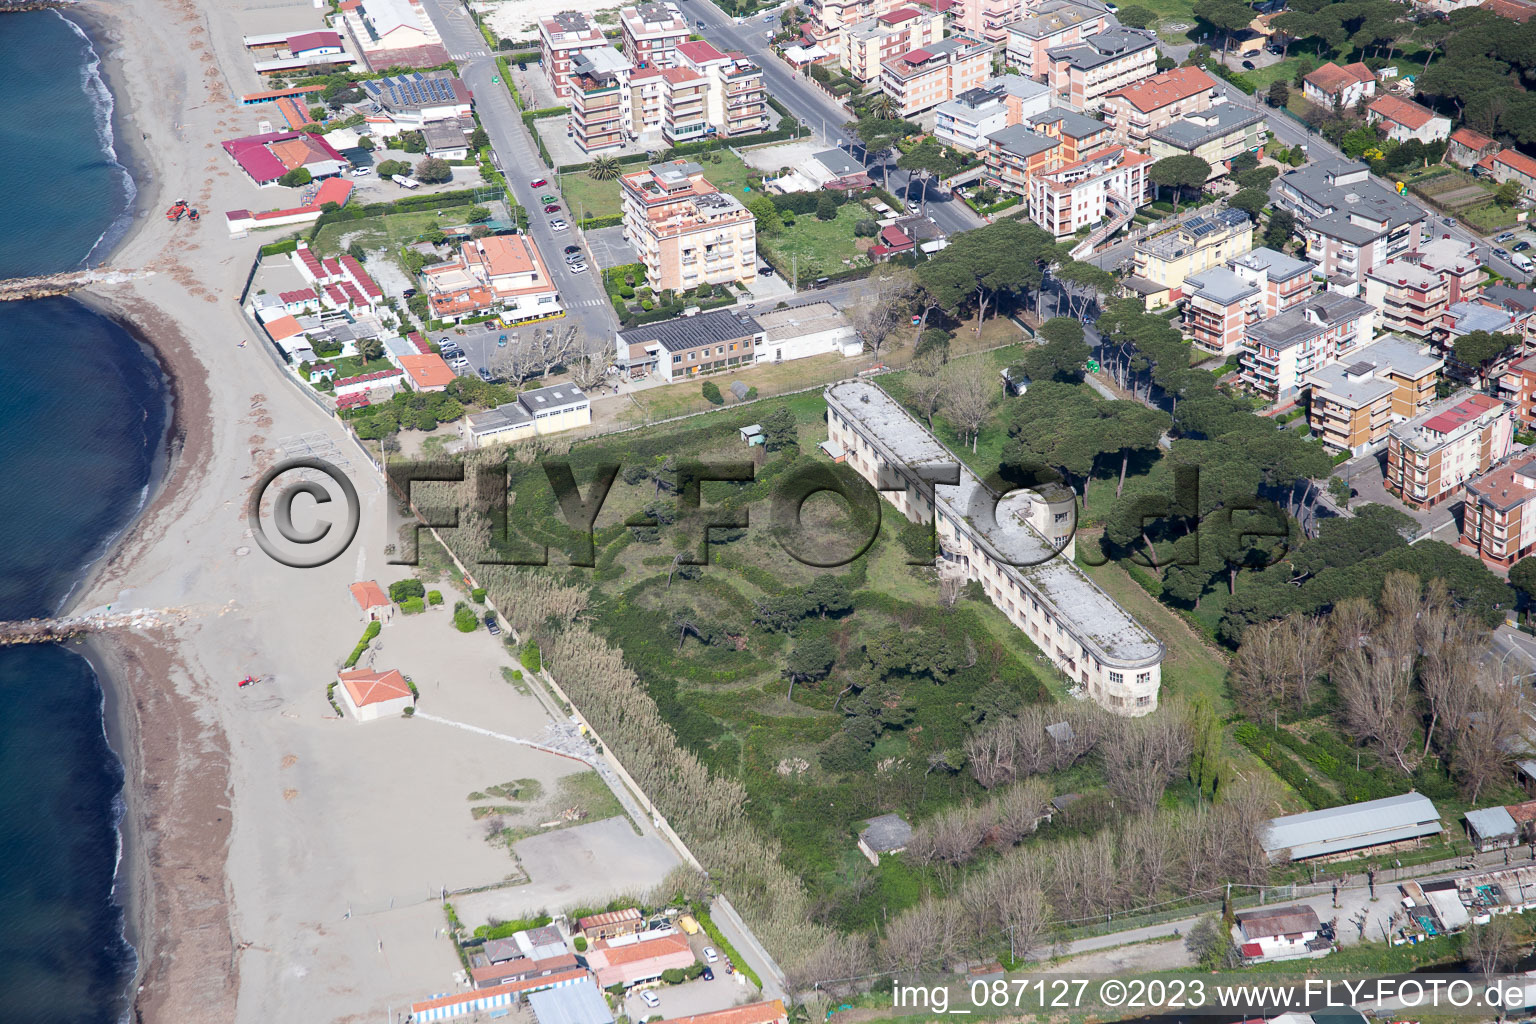 Aerial view of Marinella di Sarzana in the state Liguria, Italy